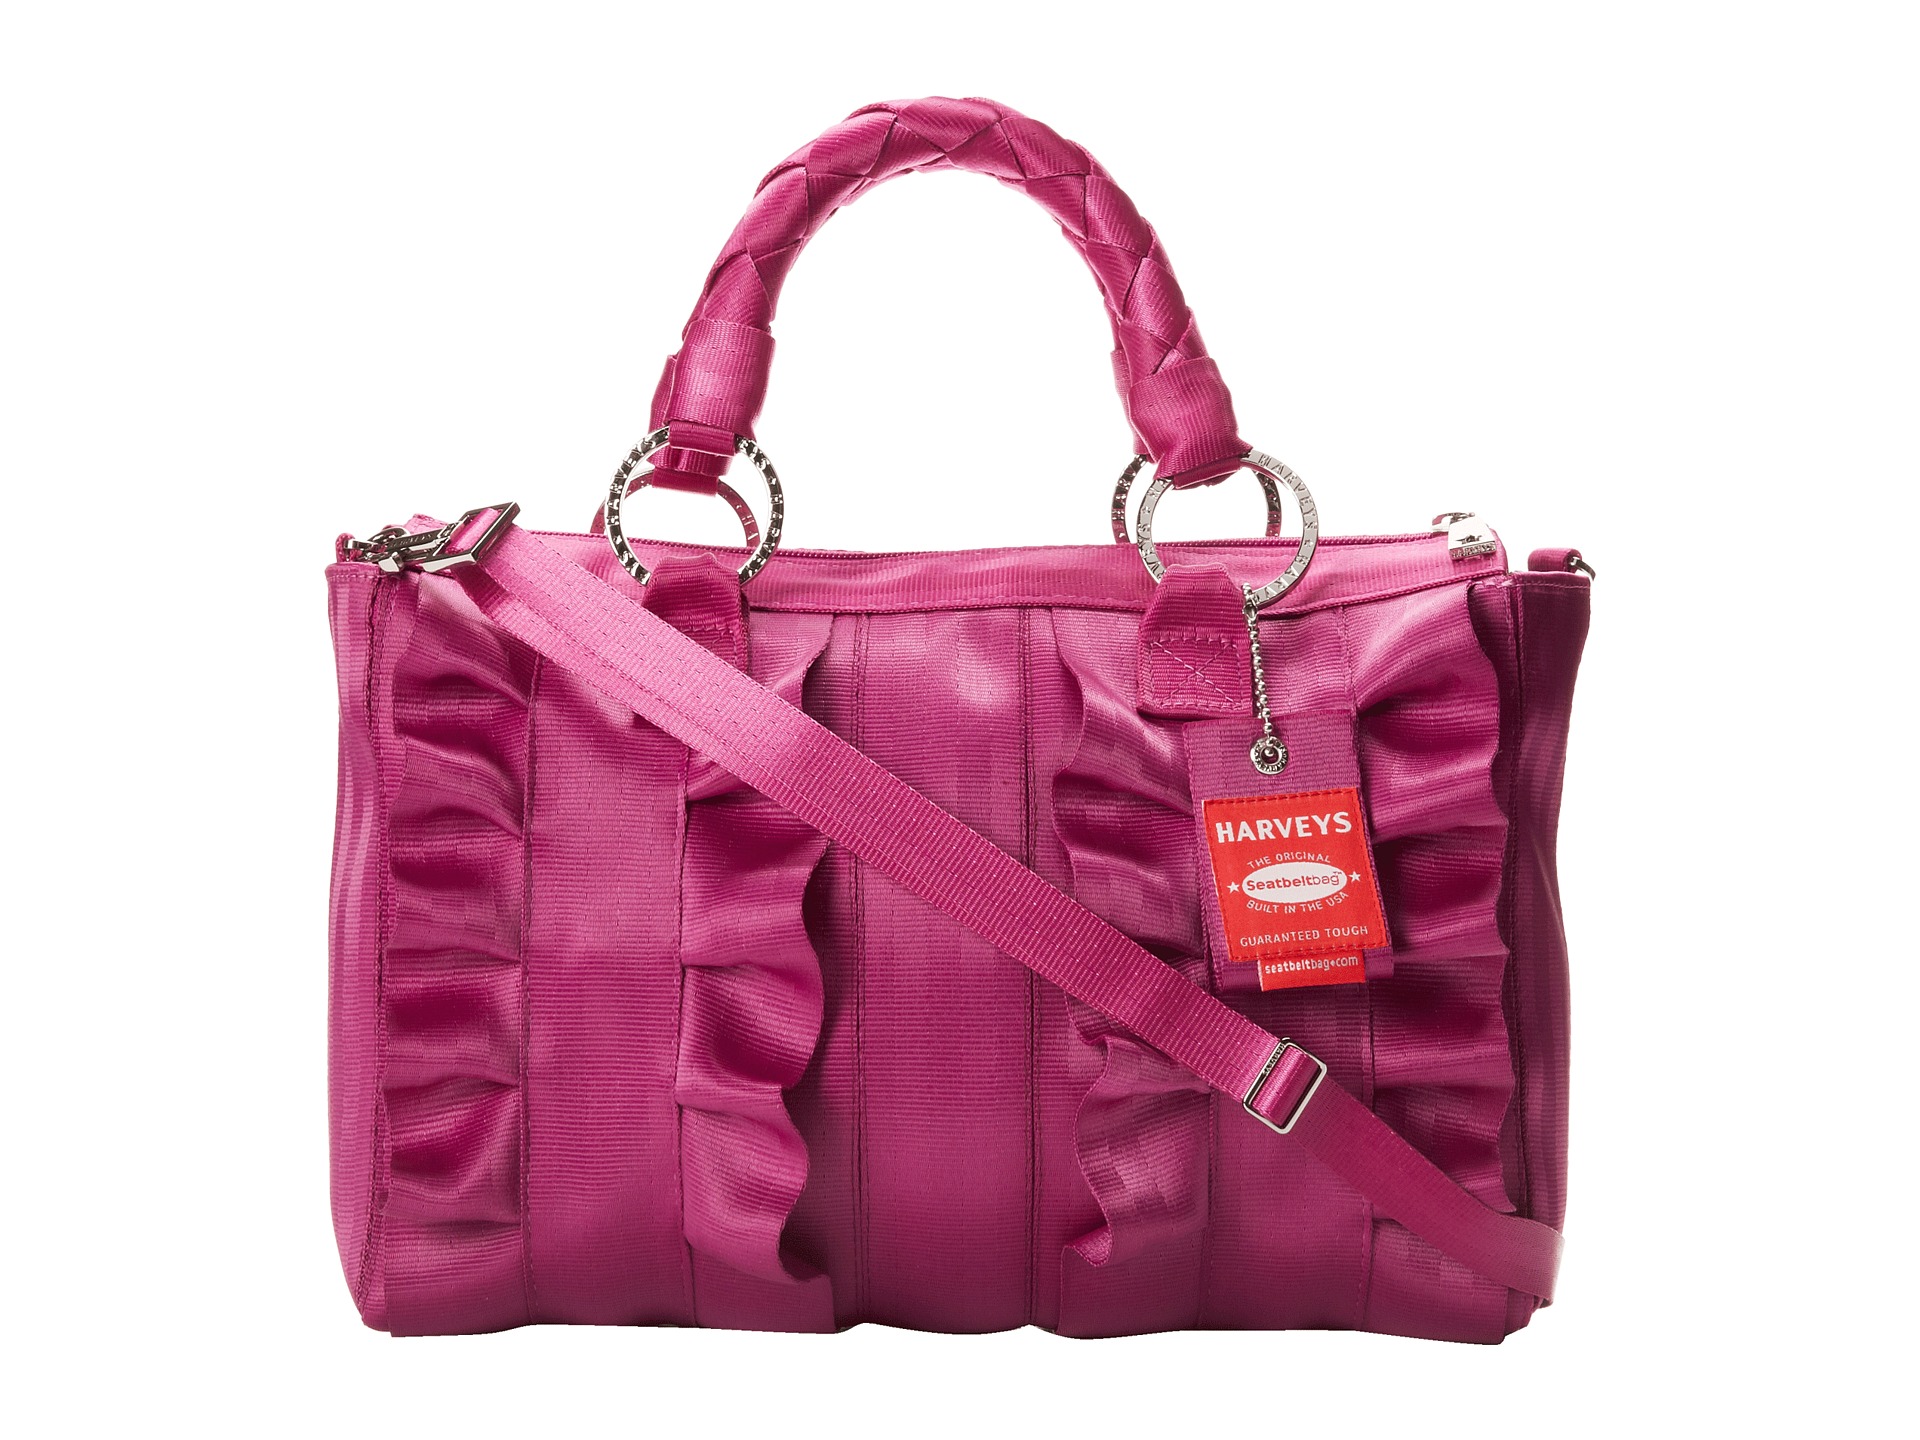 Harveys Seatbelt Bag Lola Satchel - Zappos.com Free Shipping BOTH Ways